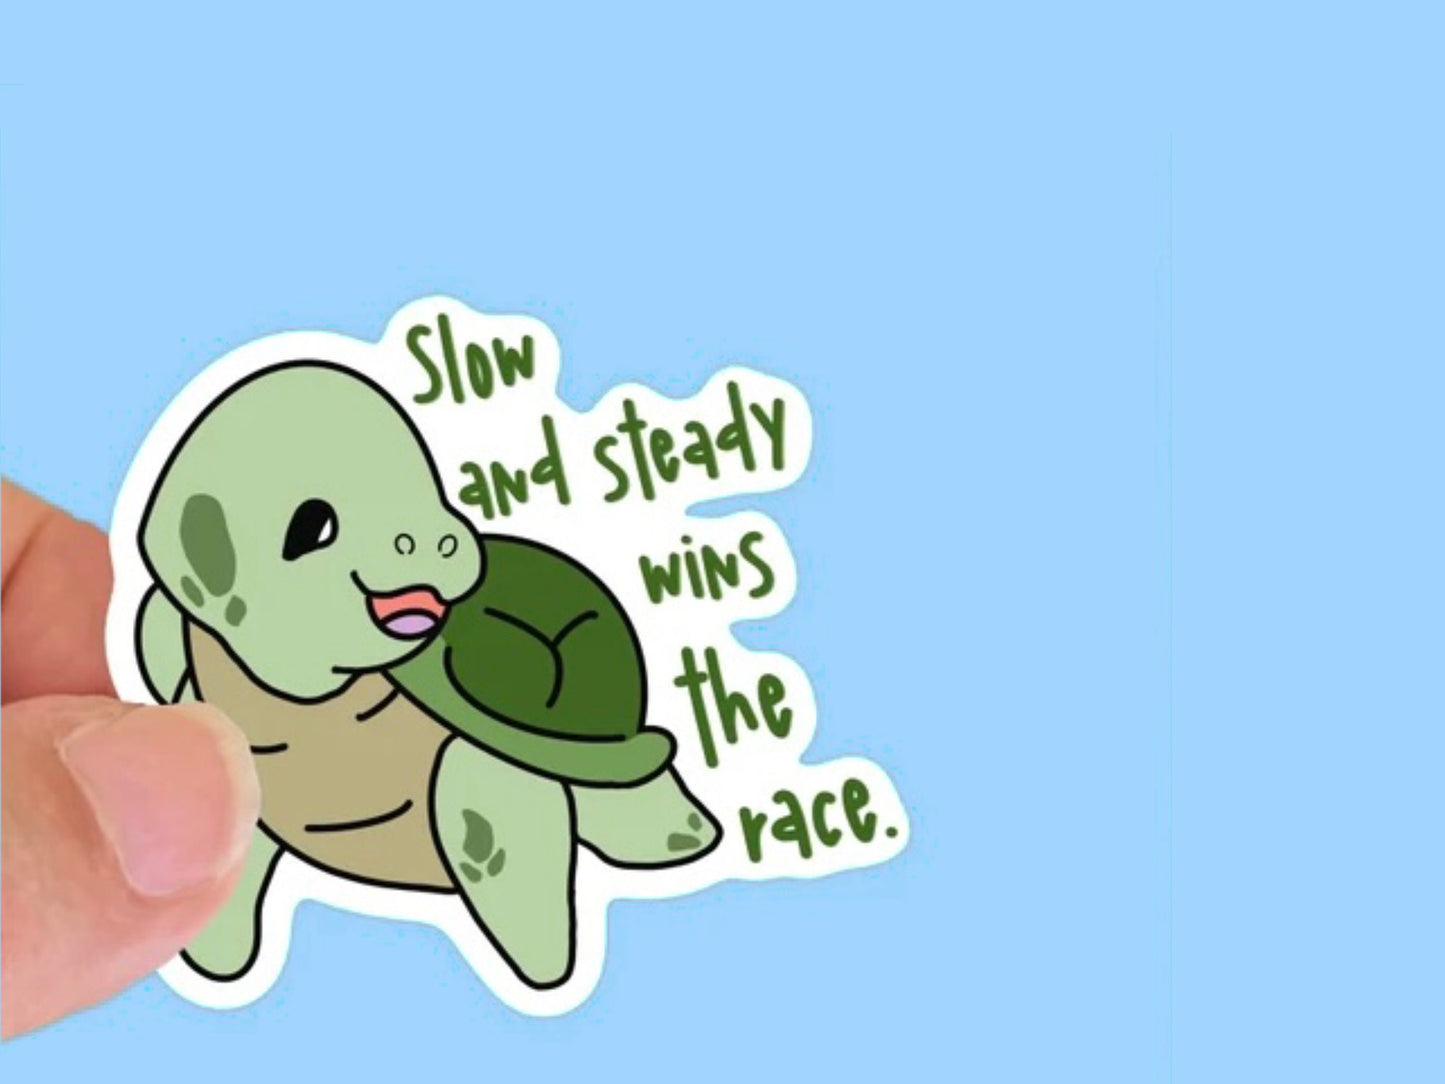 Turtle Slow and Steady wins the race Kid’s get wellWaterproof Sticker, Water Bottle Decal, Laptop Sticker